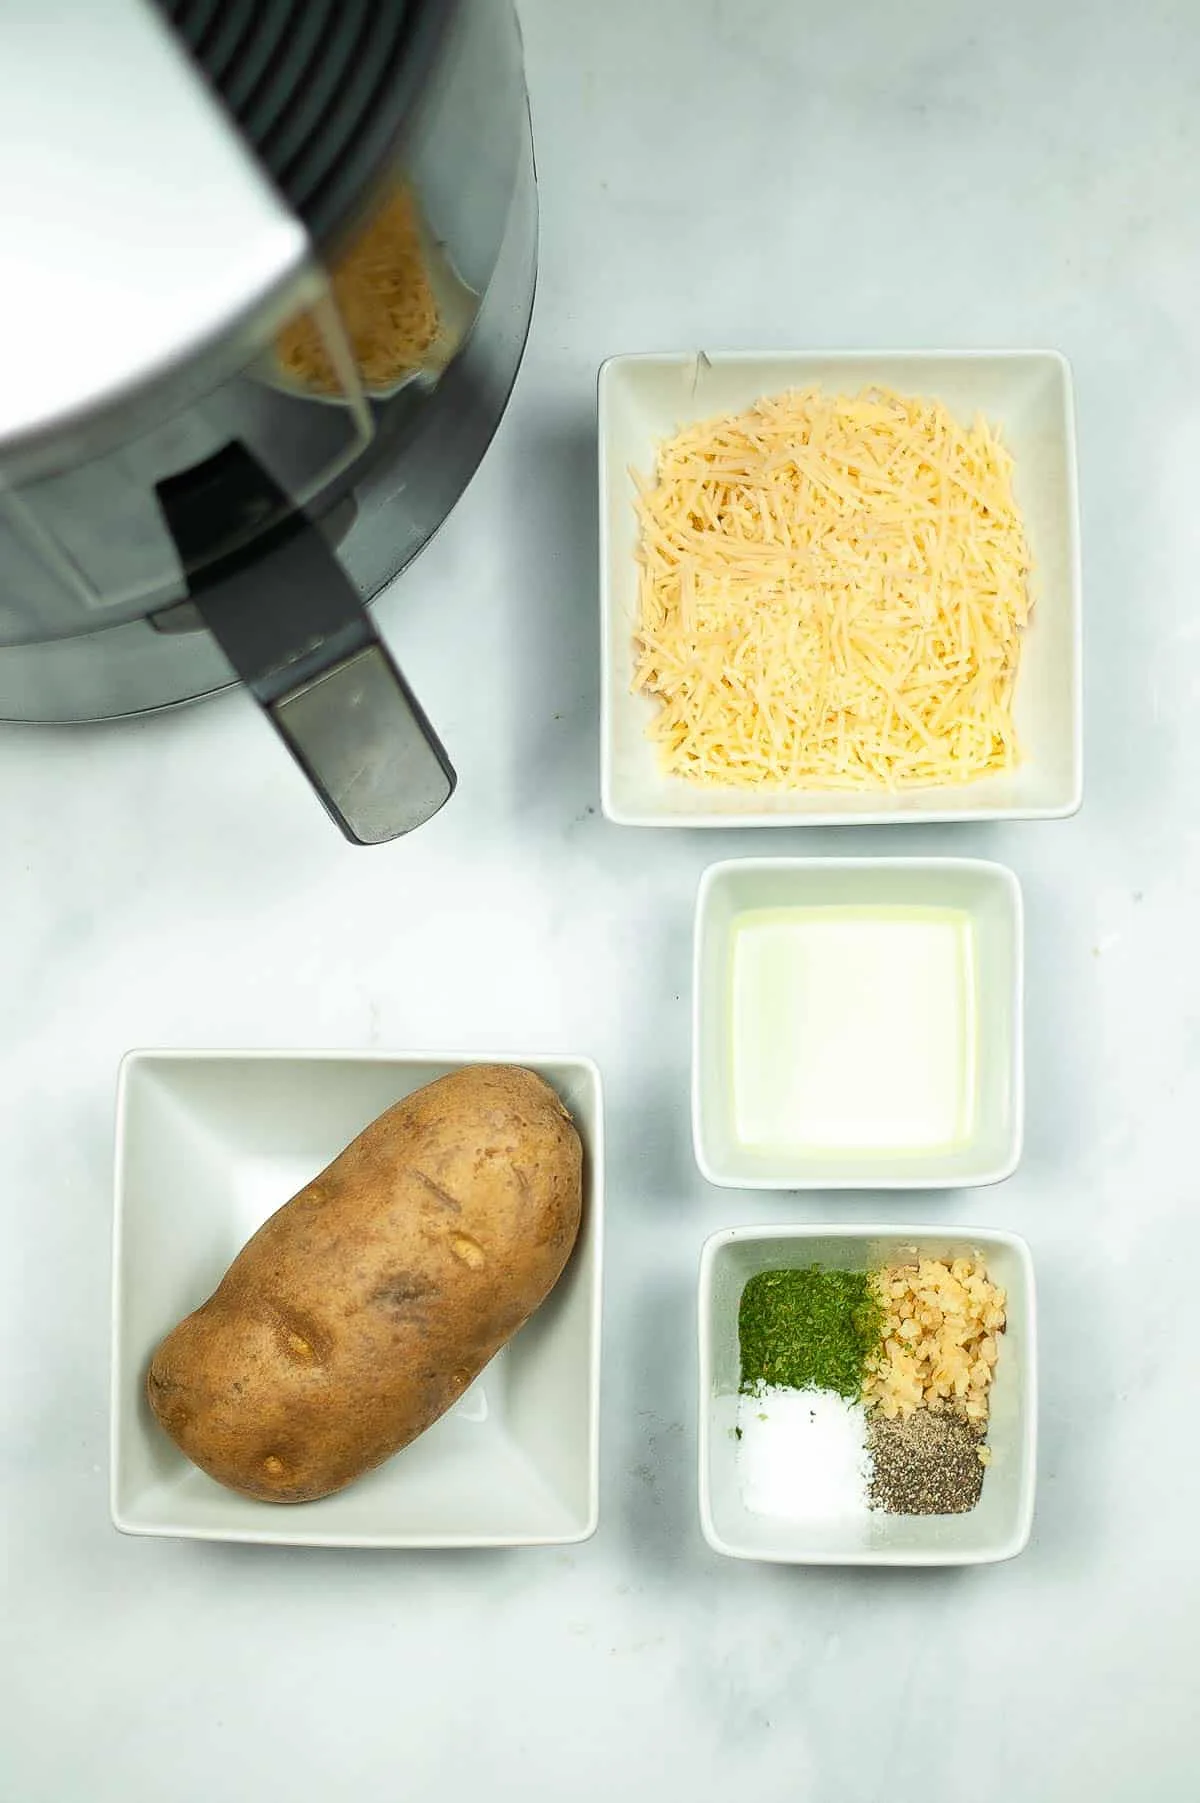 Ingredients to make garlic Parmesan fries in the air fryer